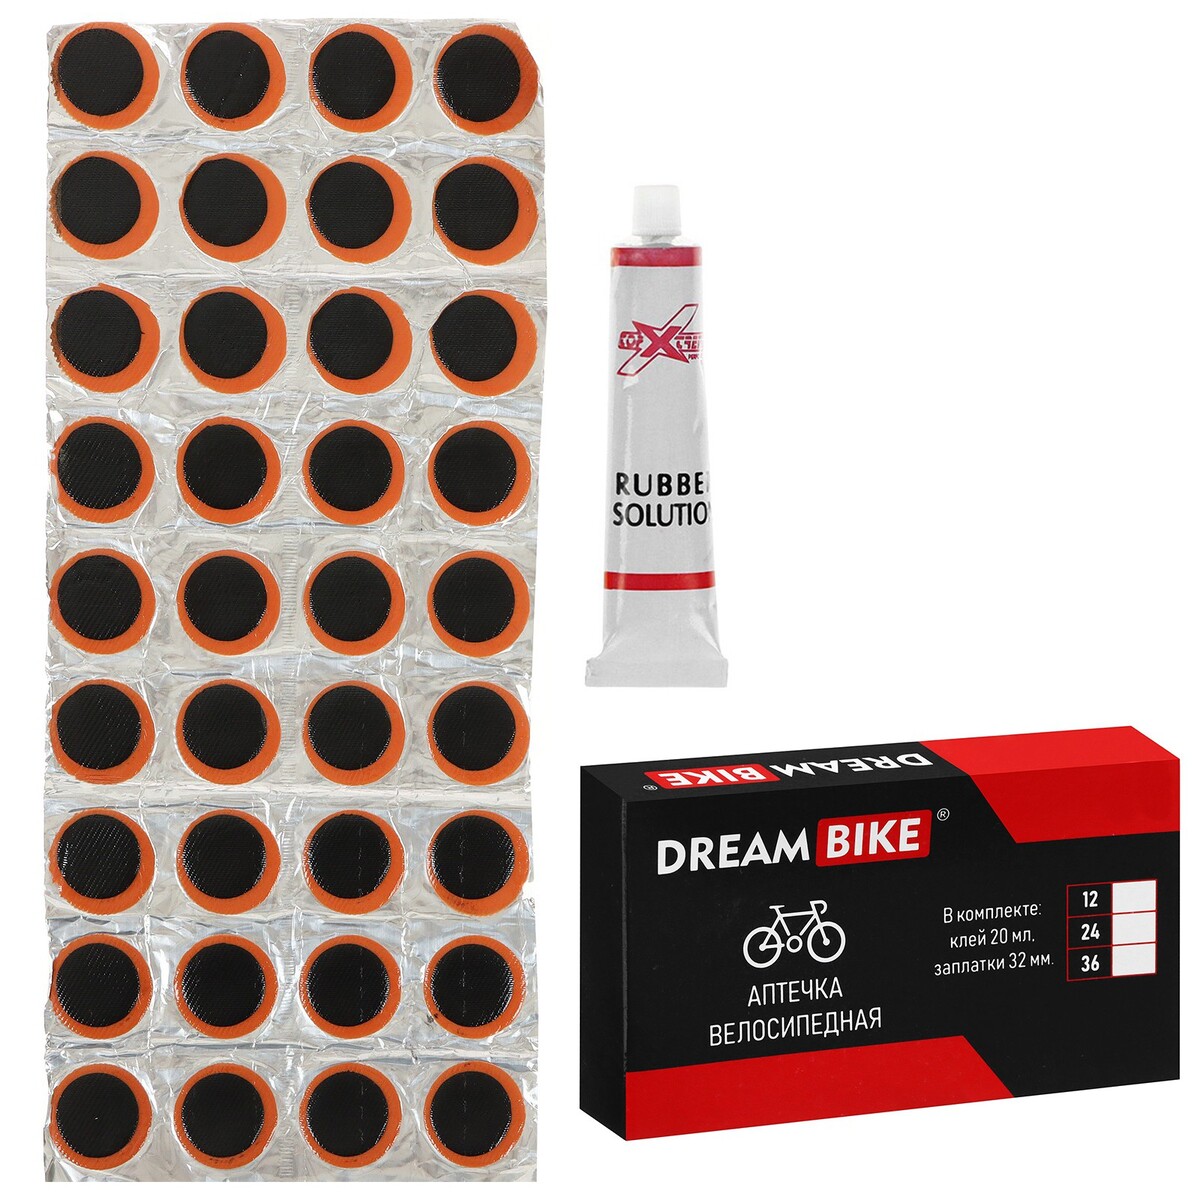 Аптечка велосипедная dream bike, 36 заплаток, Dream Bike